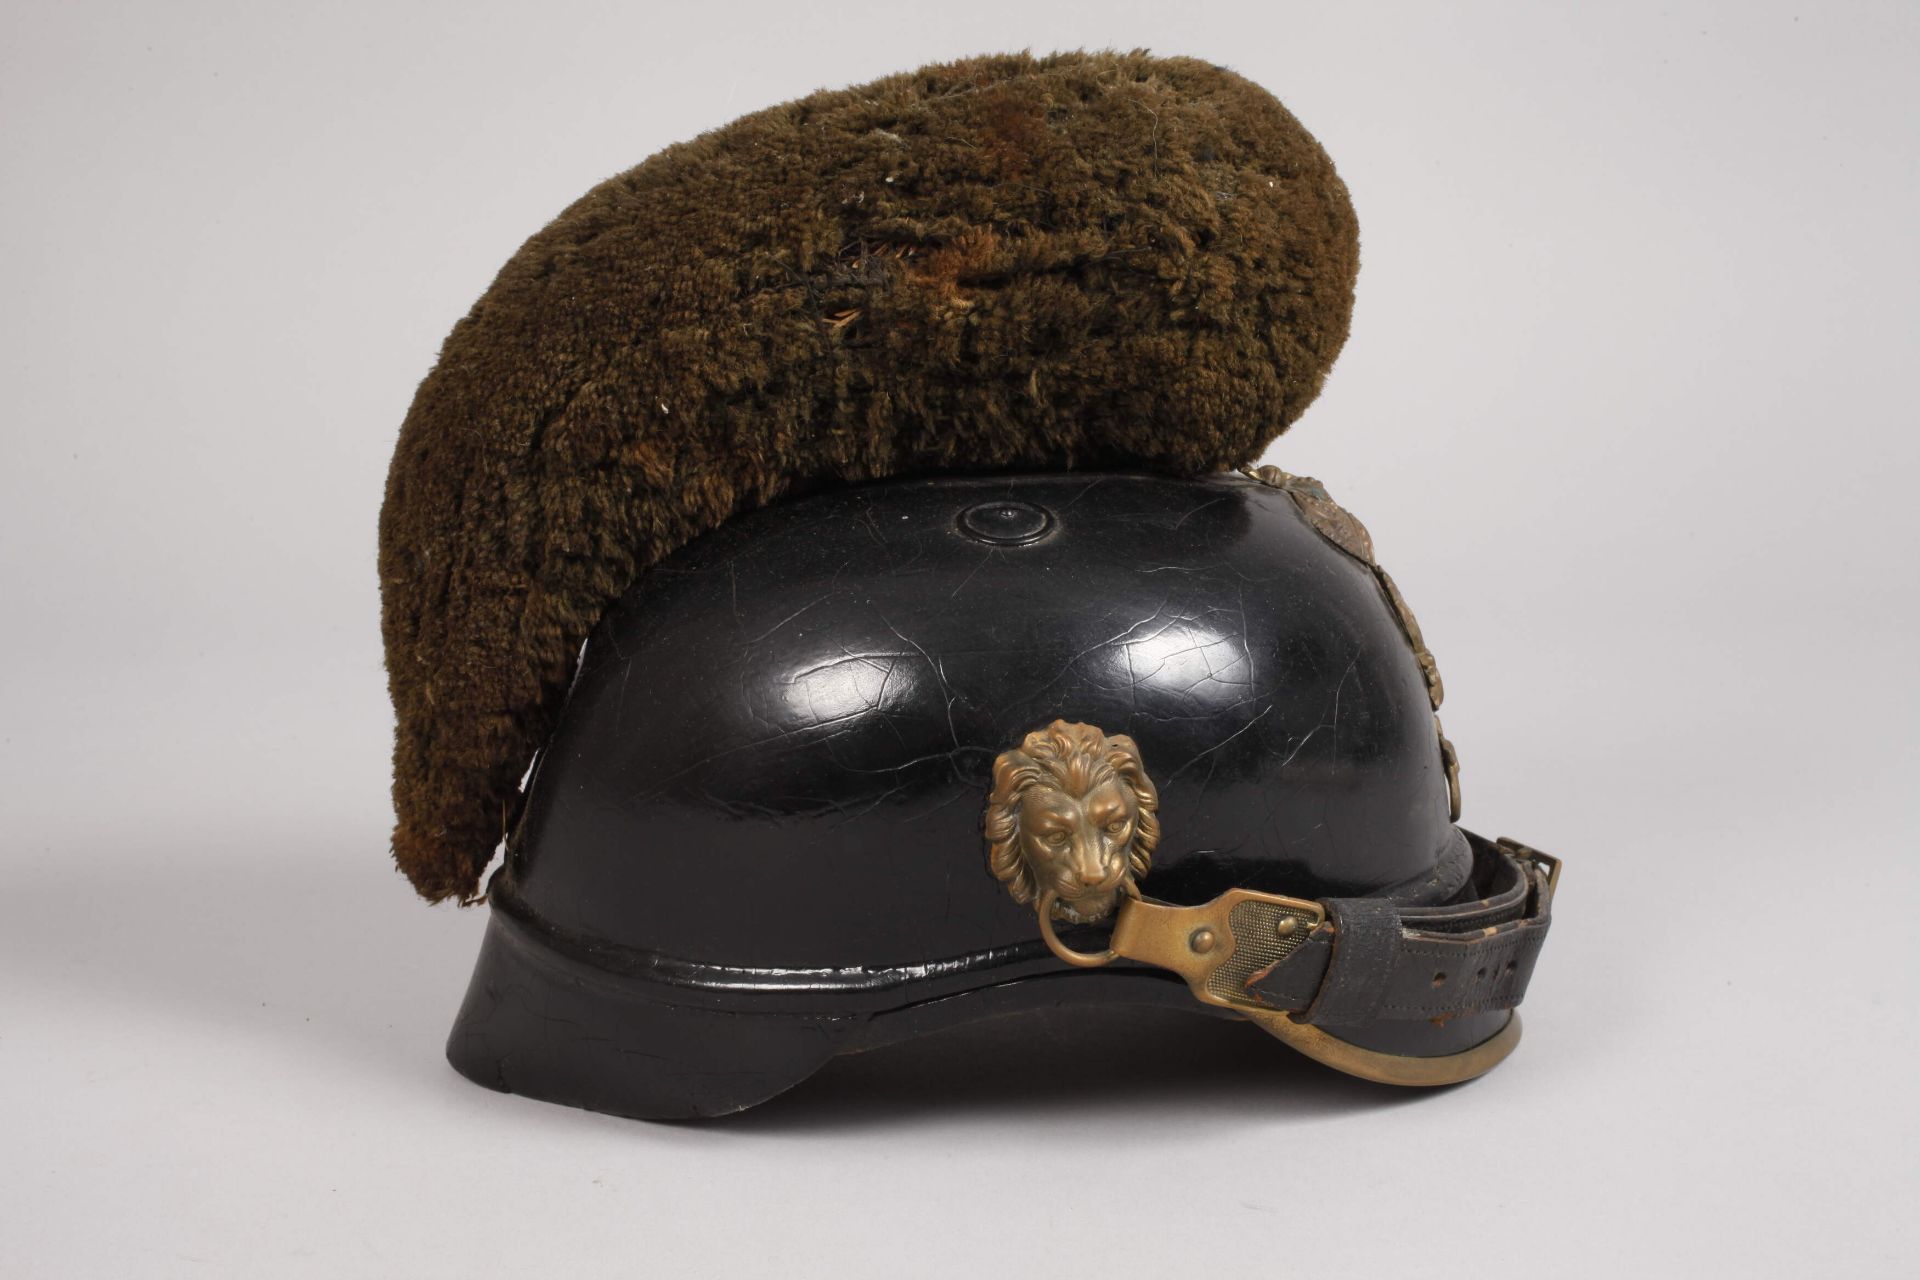 Caterpillar helmet Bavaria - Image 2 of 4